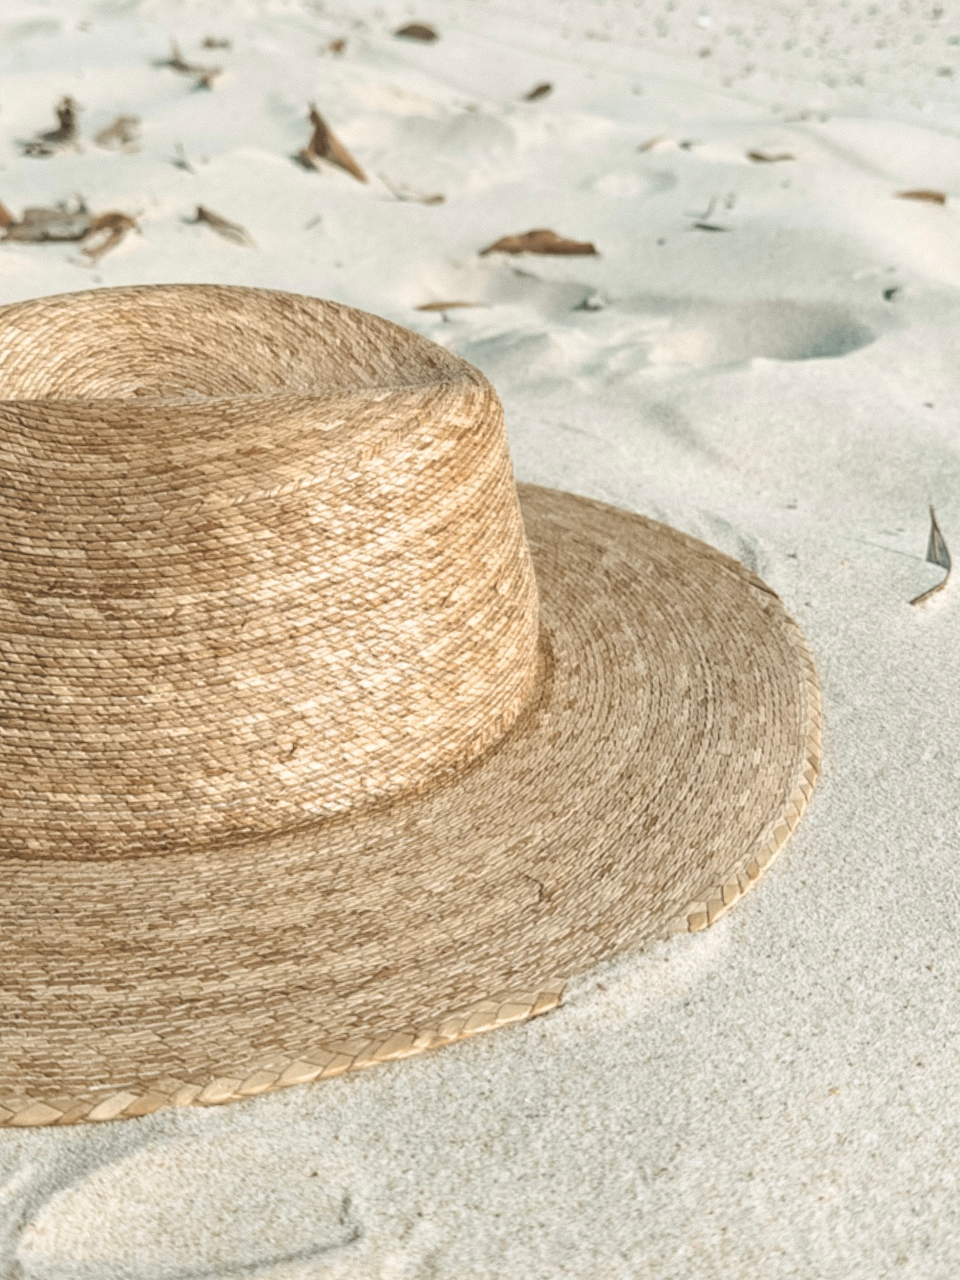 Straw Hat in the sand - Belongil Beach - Byron Bay - New South Wales - Australia